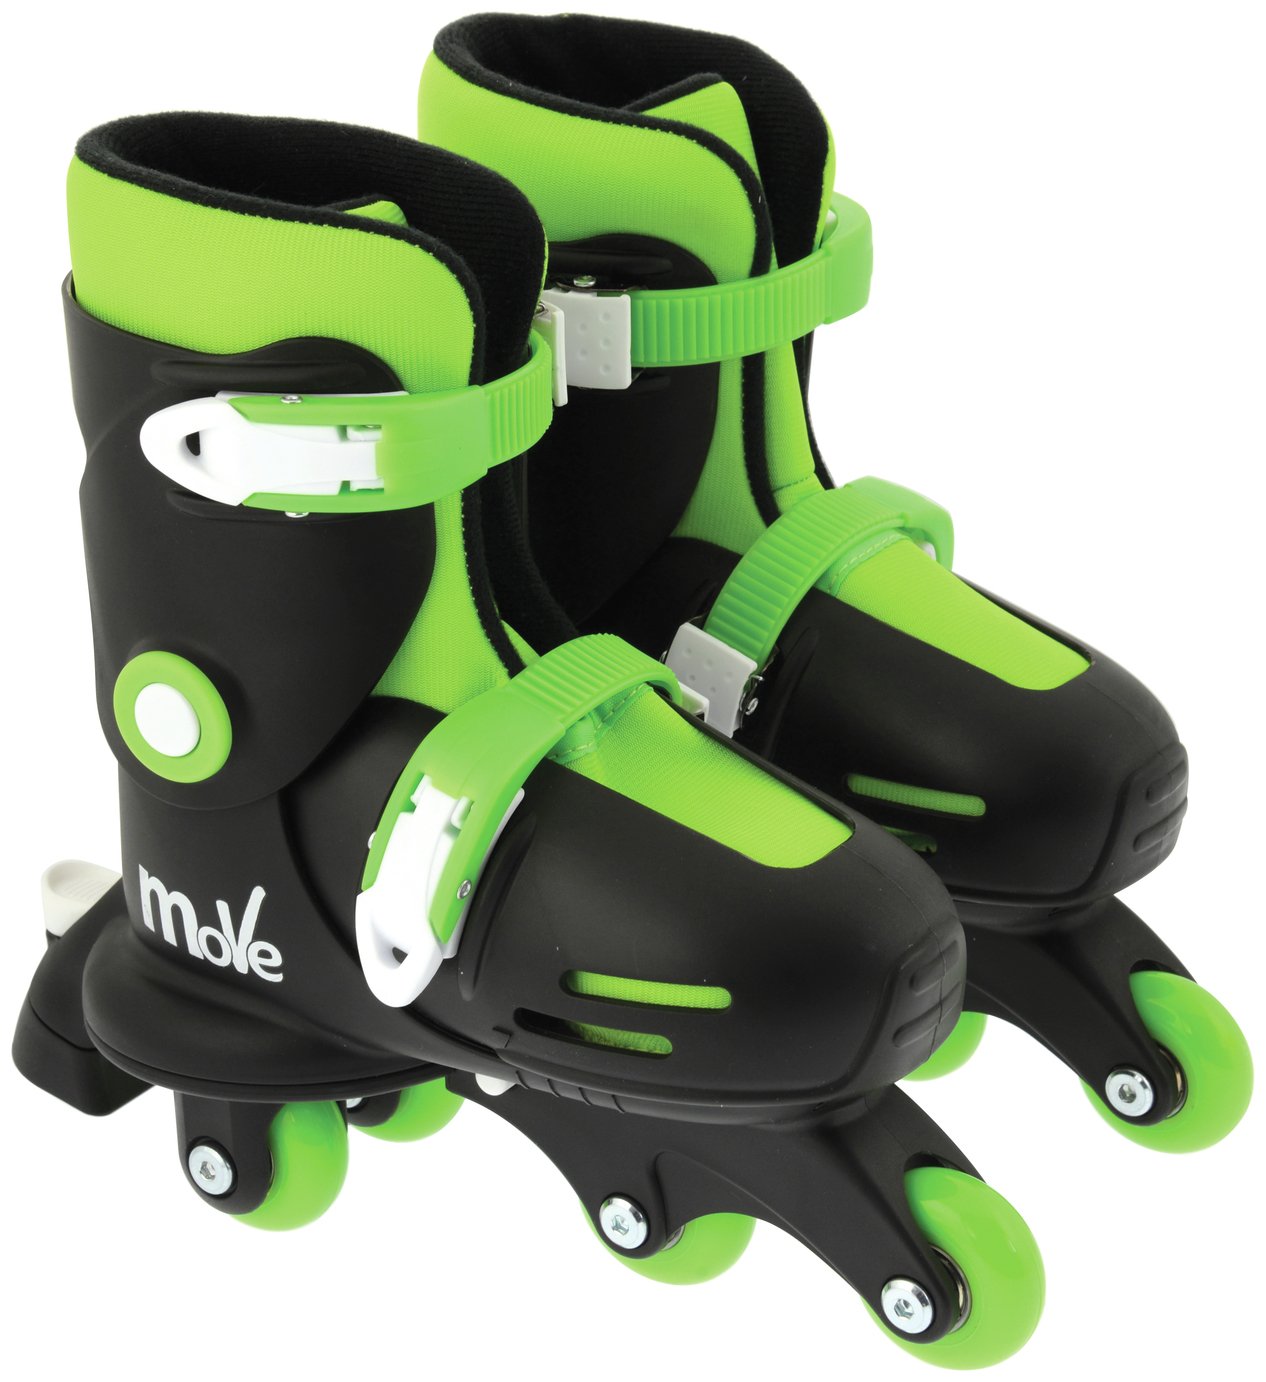 MoVe 2-in-1 Twist Adjustable Skates - Green